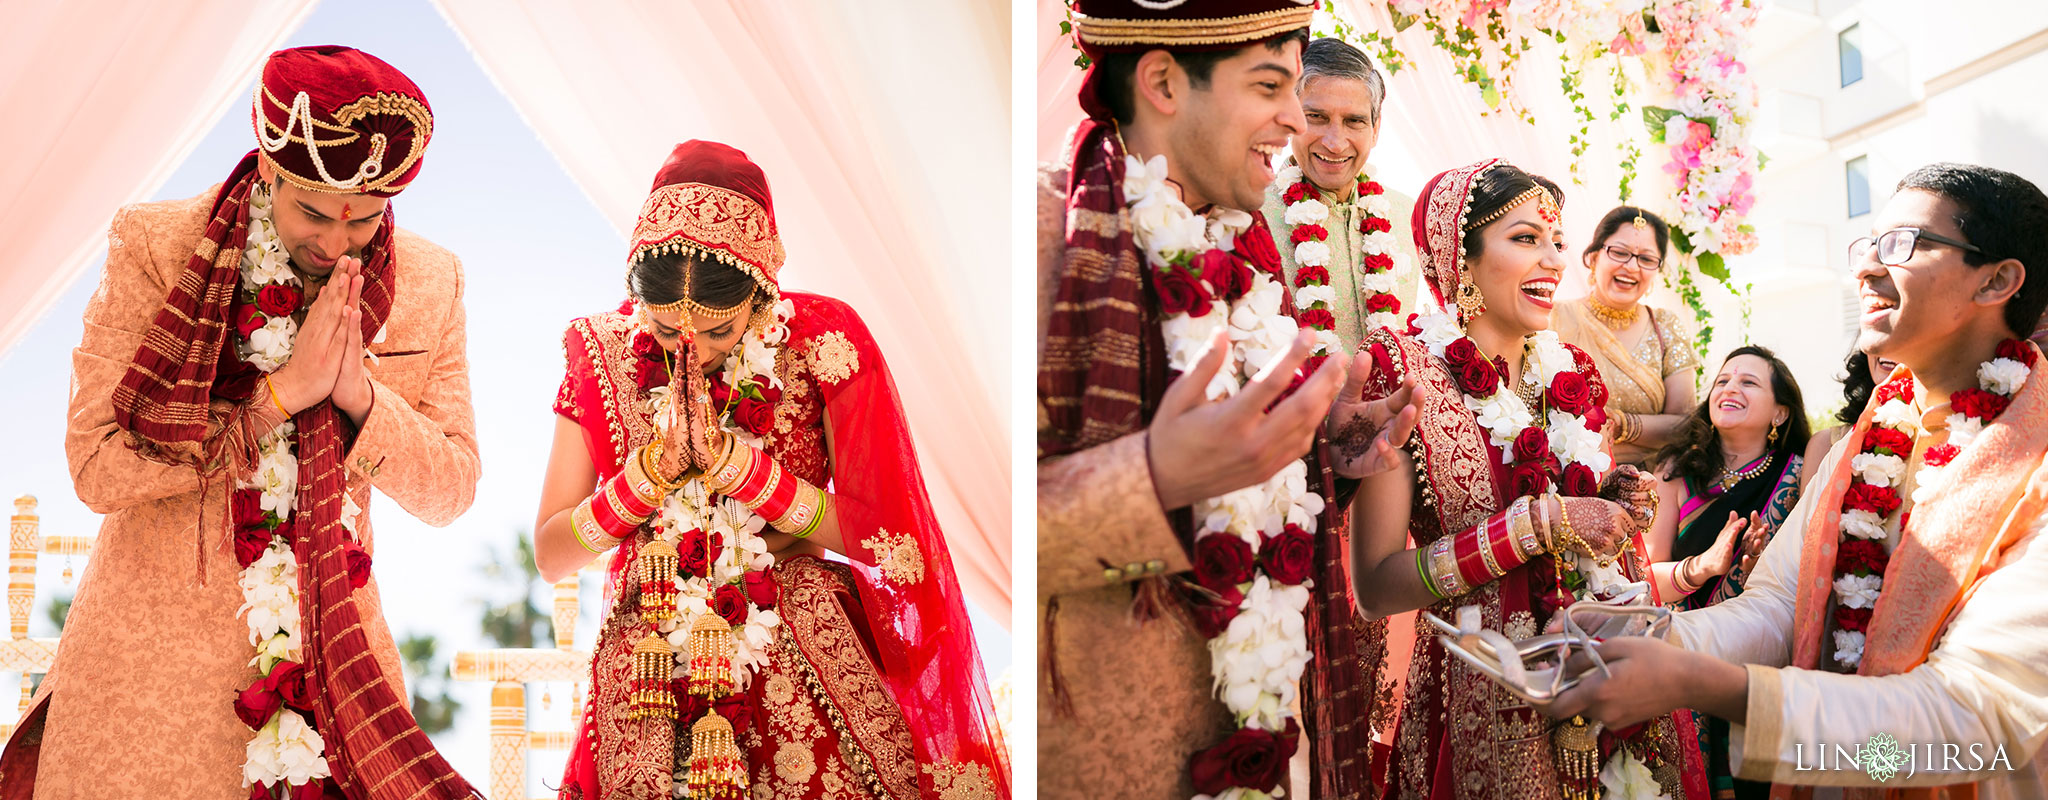 34 hilton waterfront huntington beach indian wedding ceremony photography